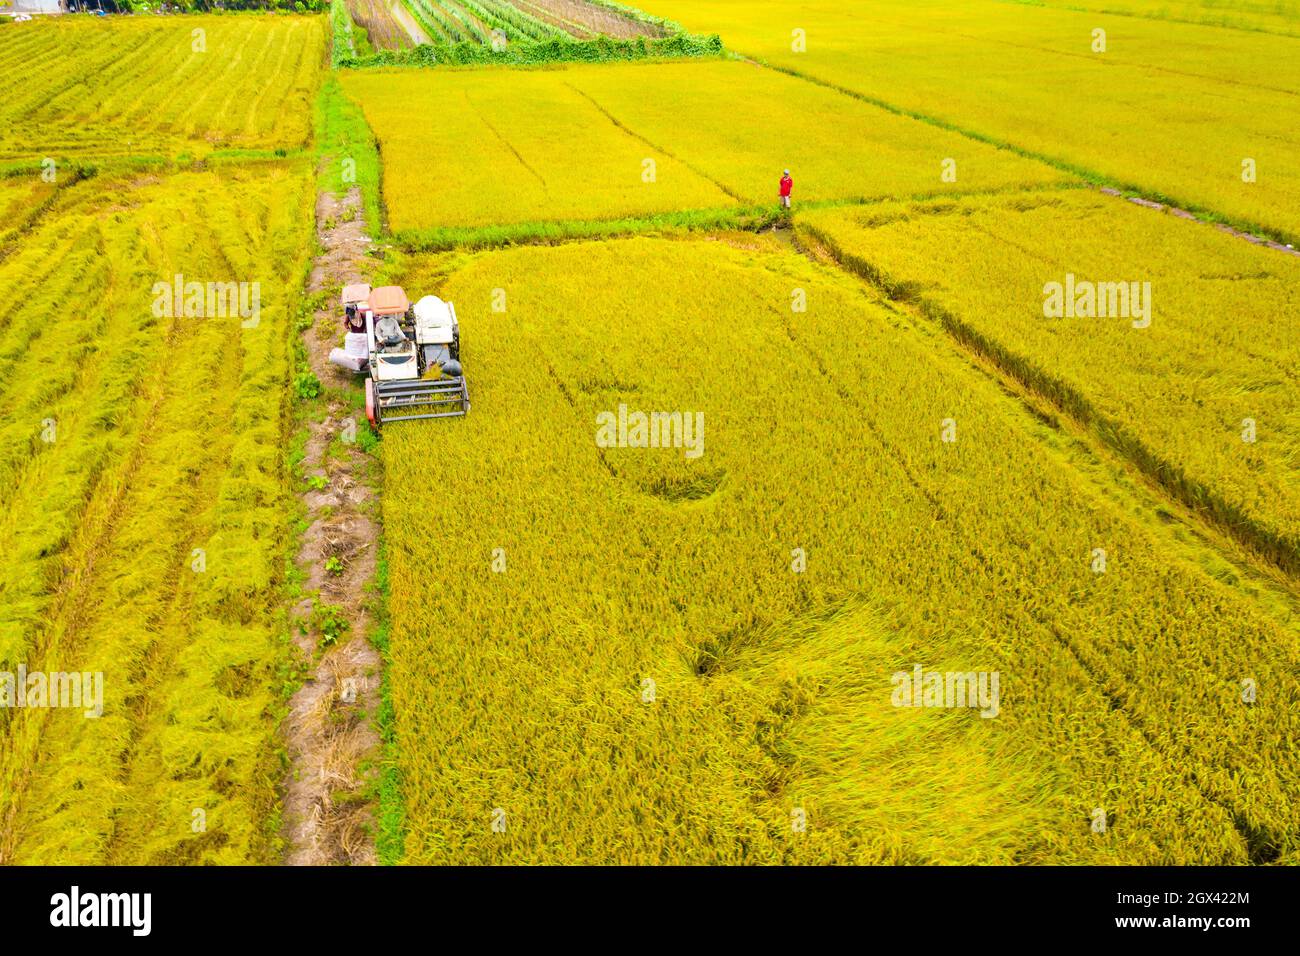 Winter-spring rice crop in full harvest Stock Photo